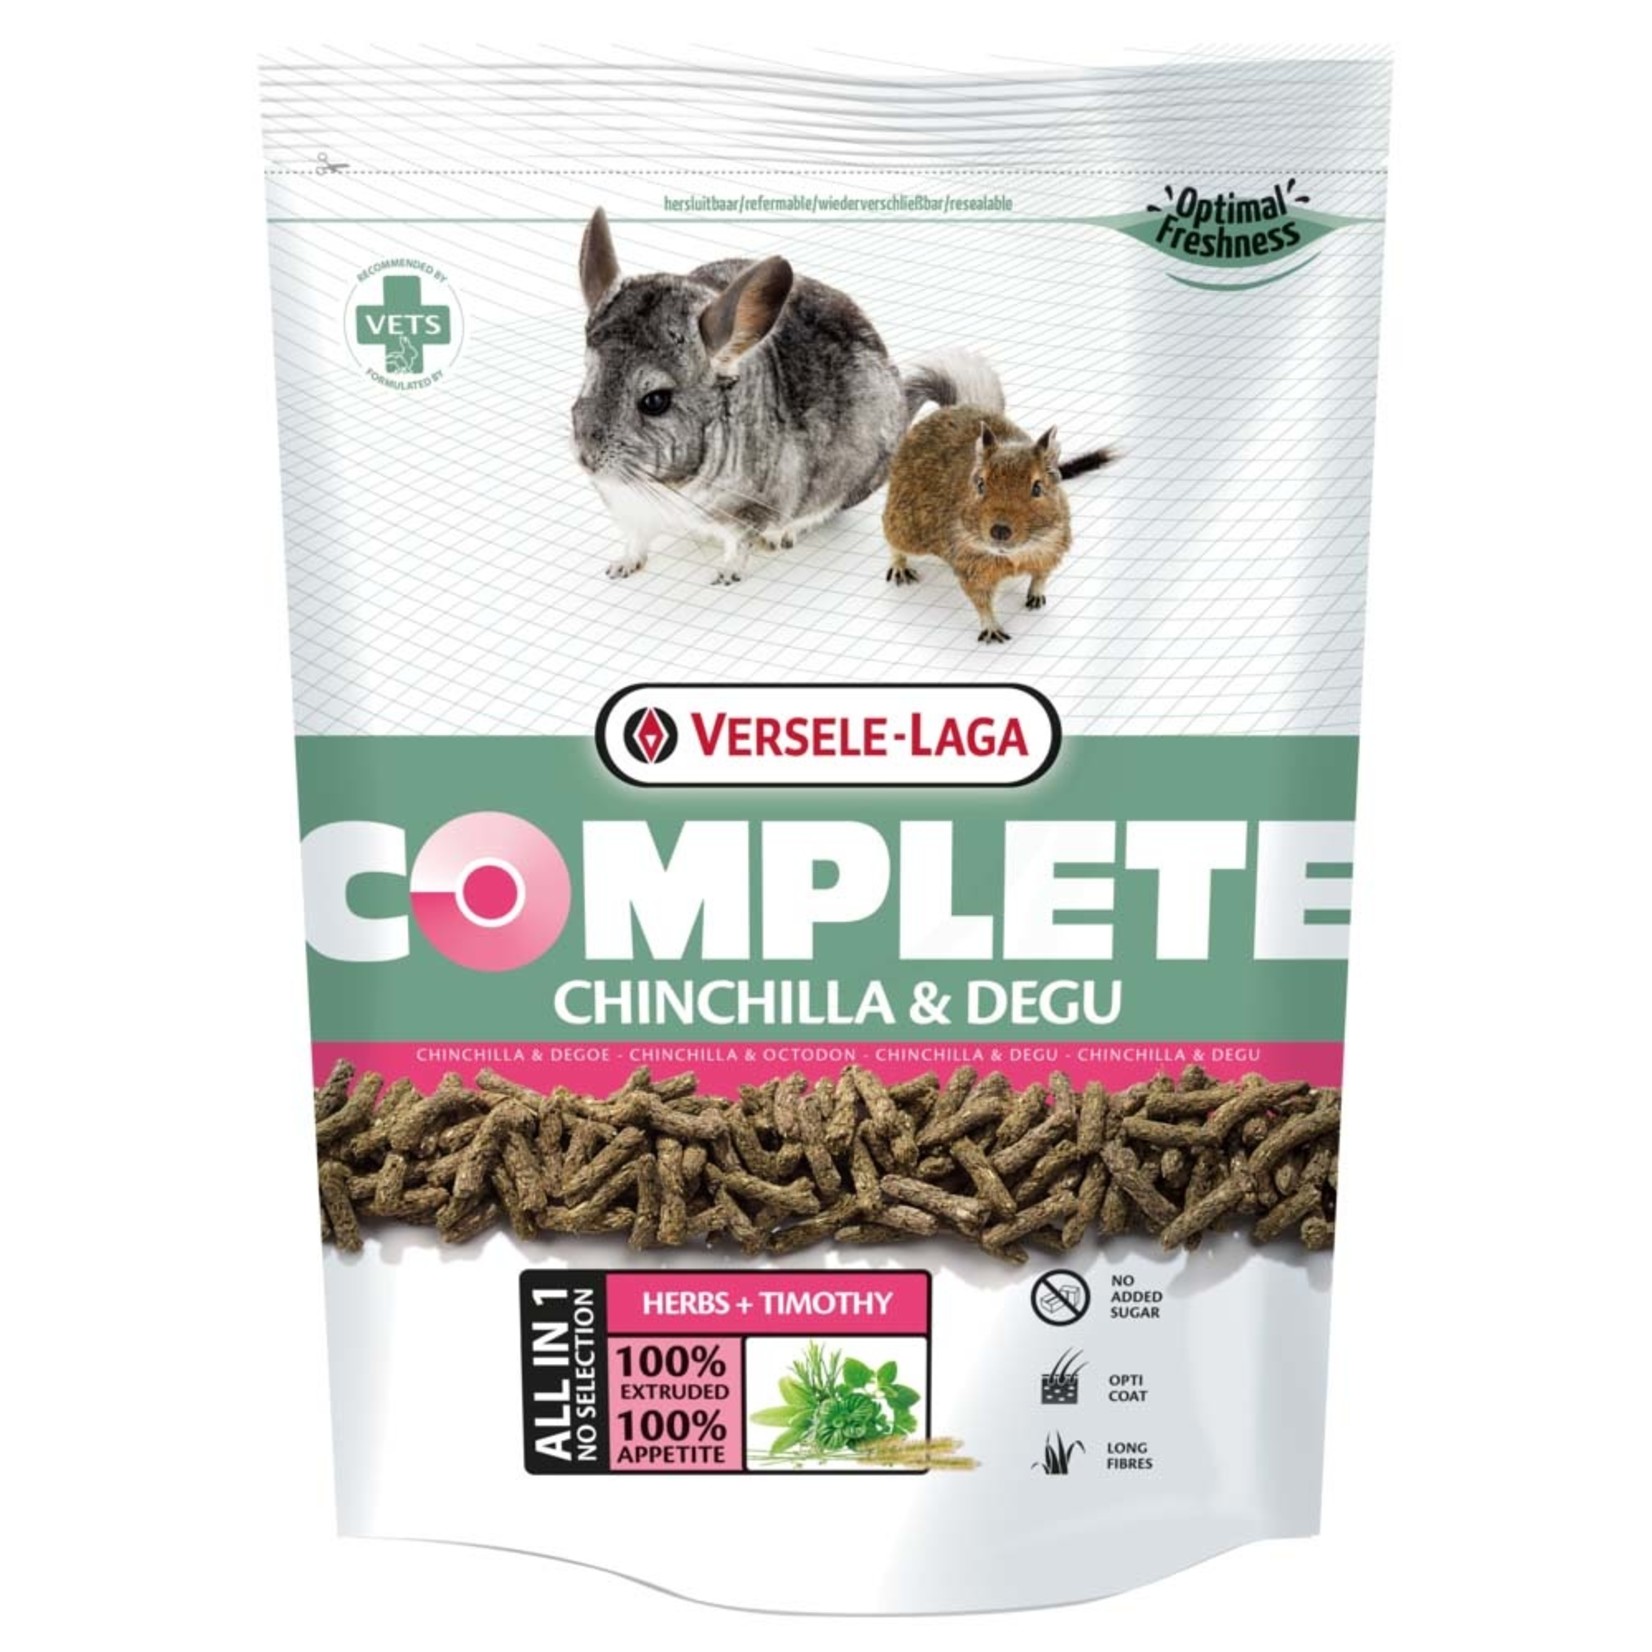 Versele-Laga Complete Chinchilla & Degu Pel 1.75g